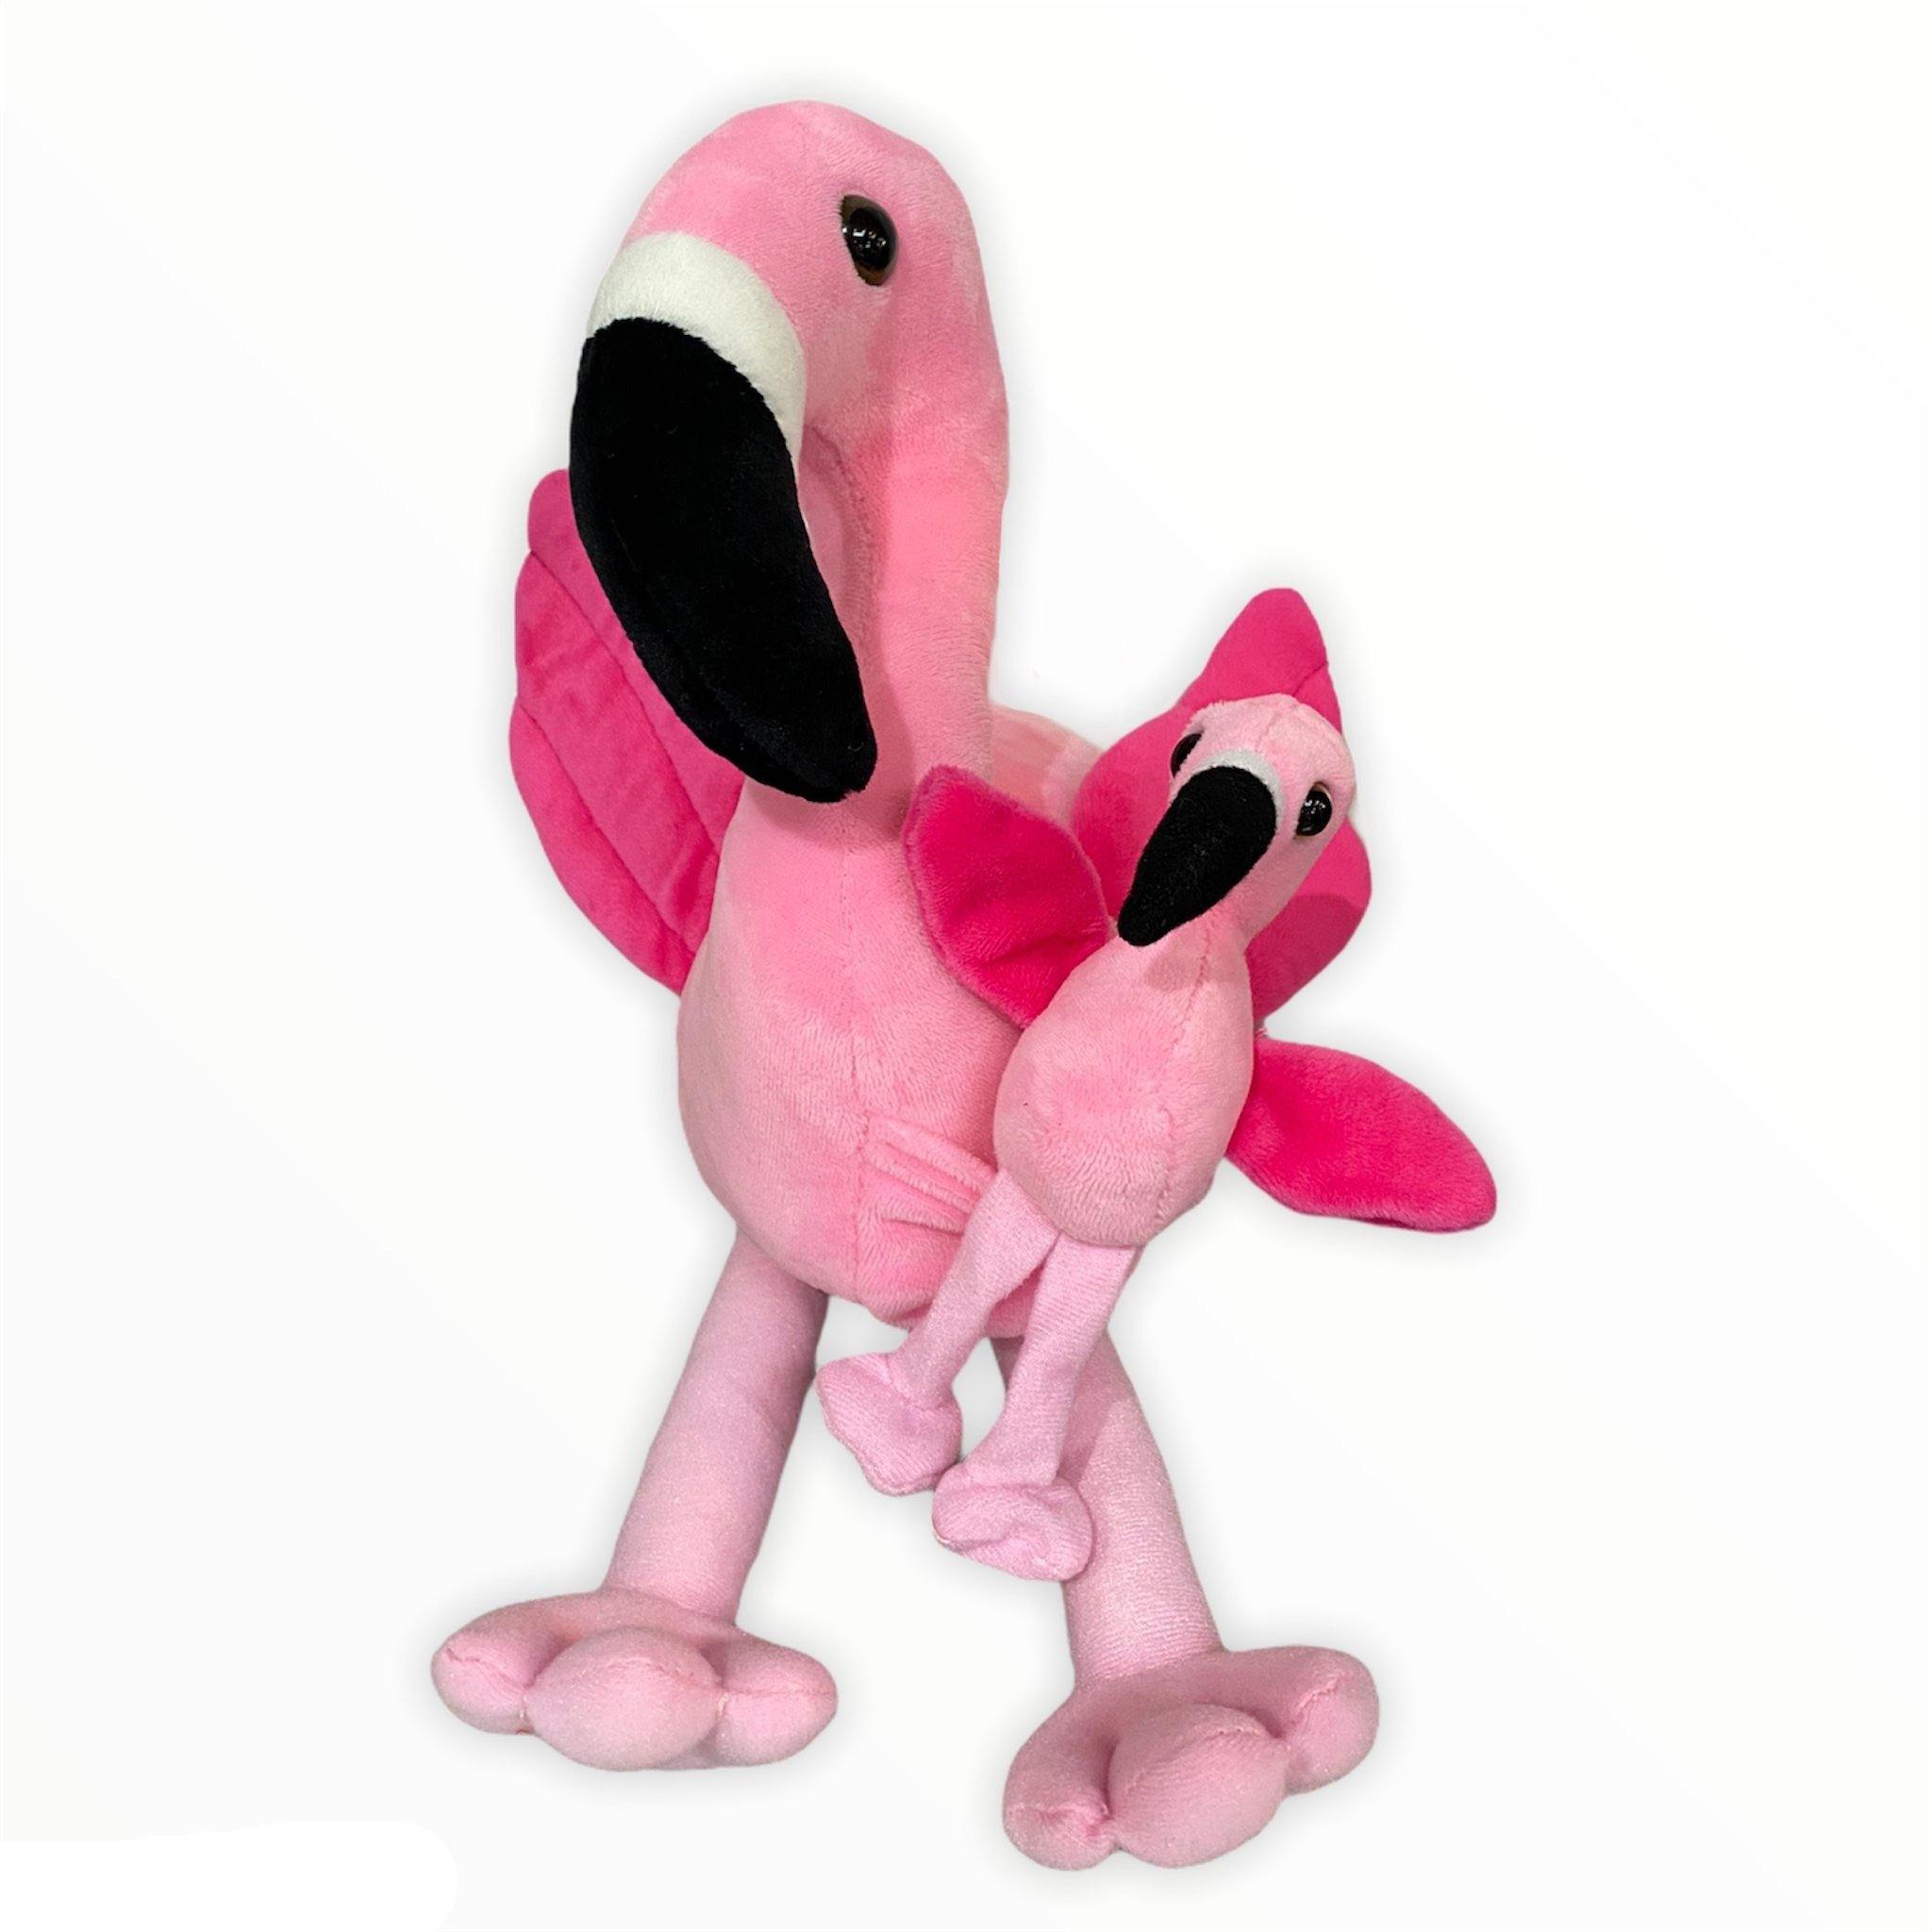 Fun Stuff Plush Toy Soft Stuffed Flamingo